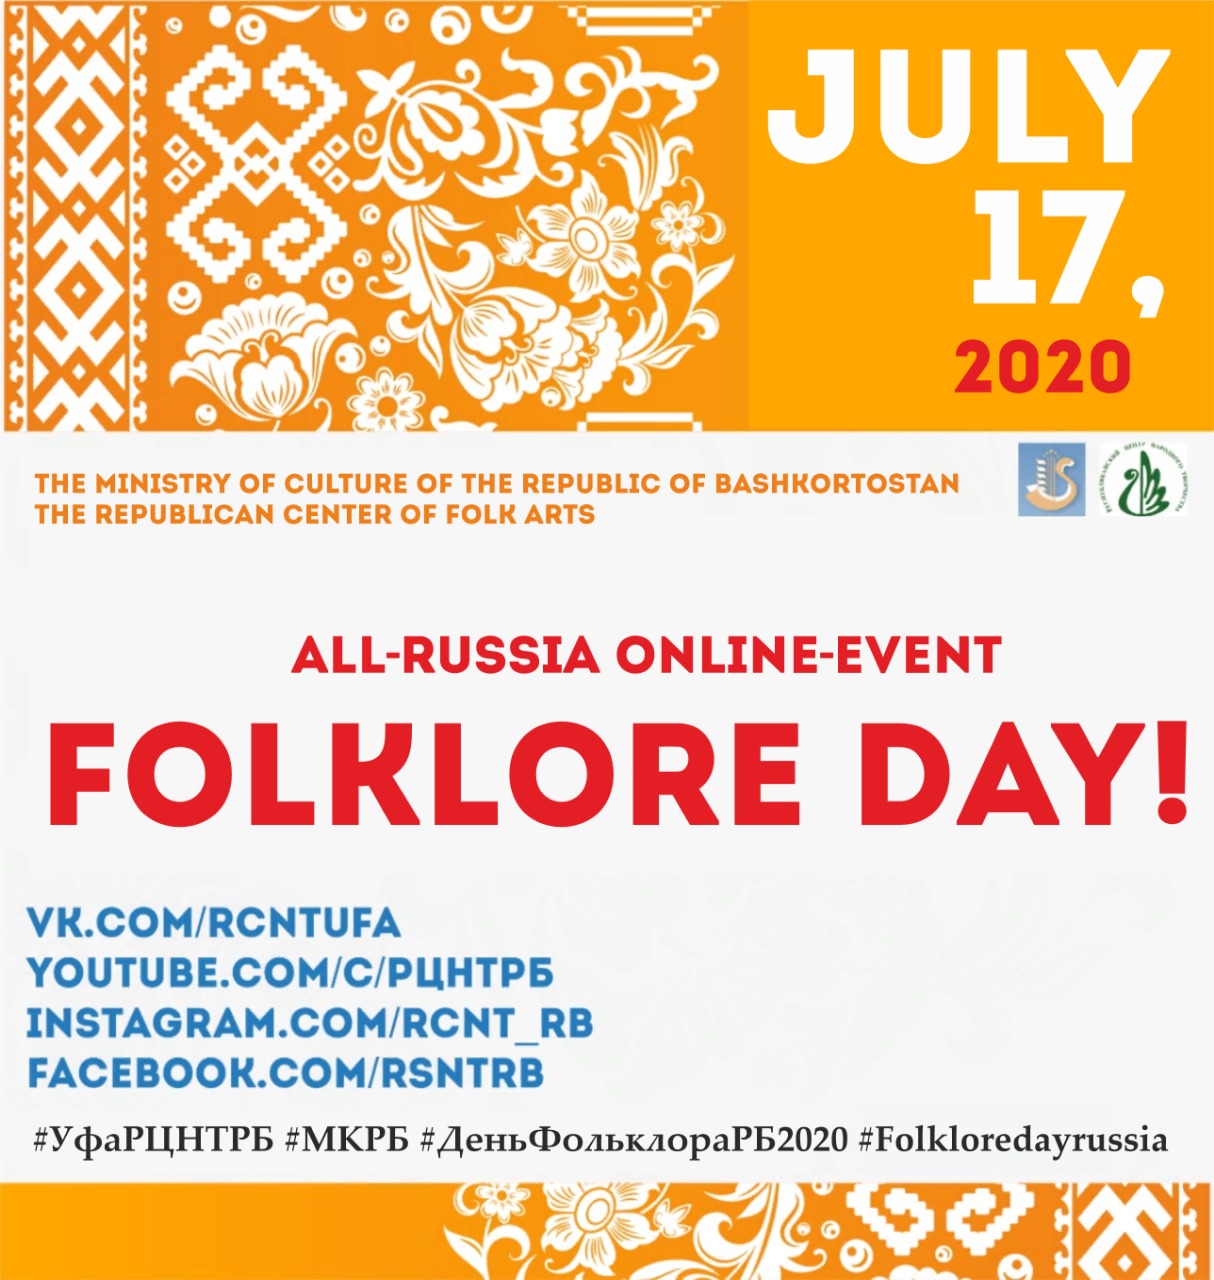 All-Russia Folklore Day